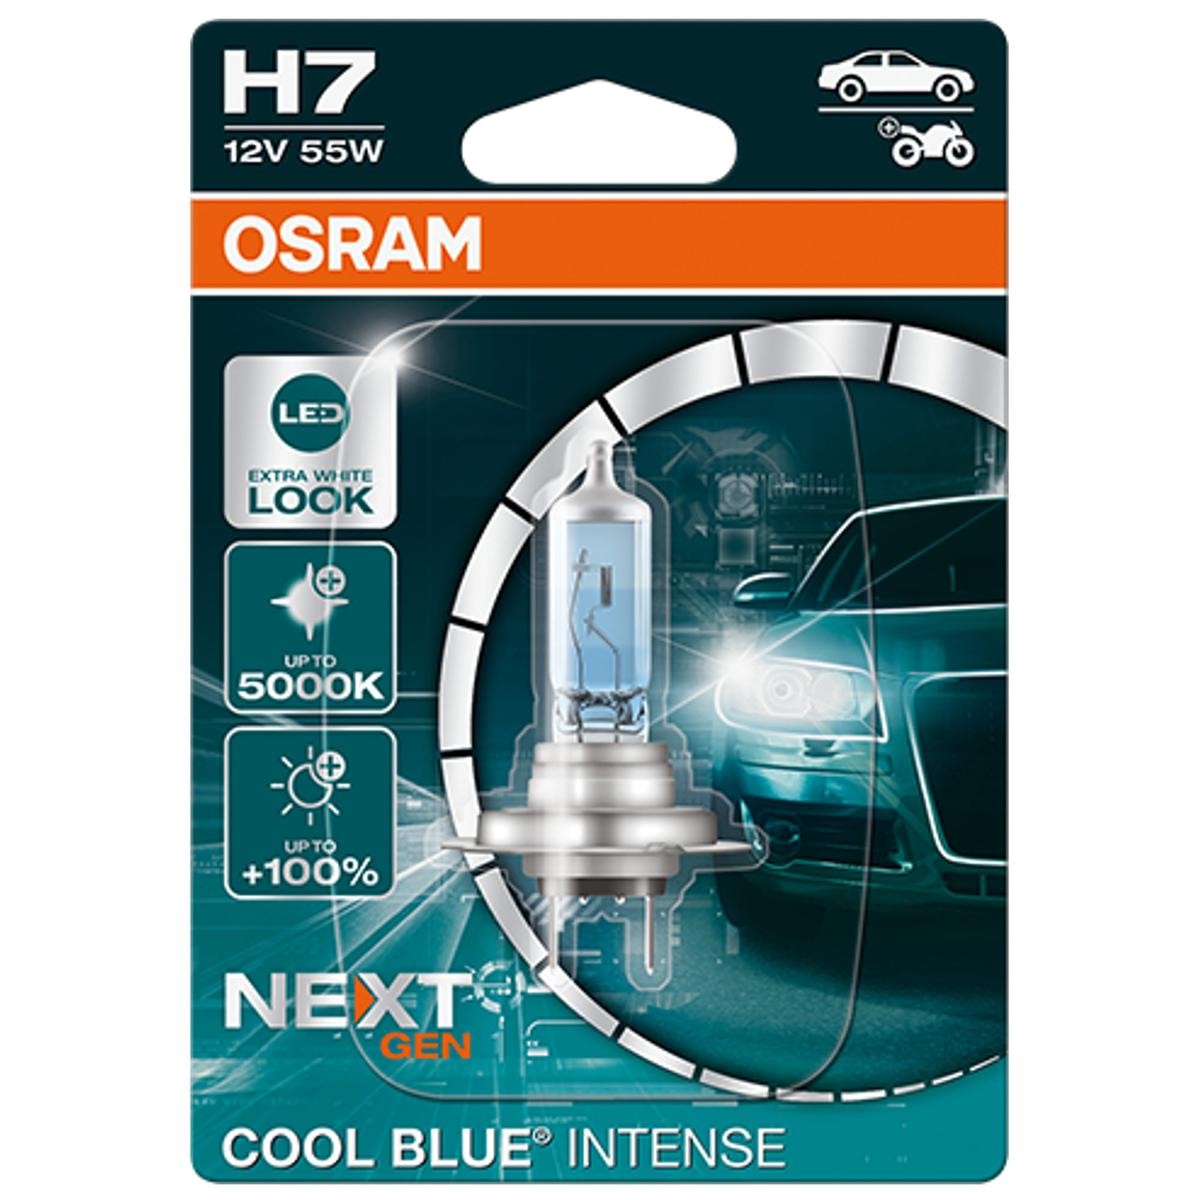 Osram Cool Blue Intense H7 par de faros delanteros individual Pack 12 V55 W  64210 CBI